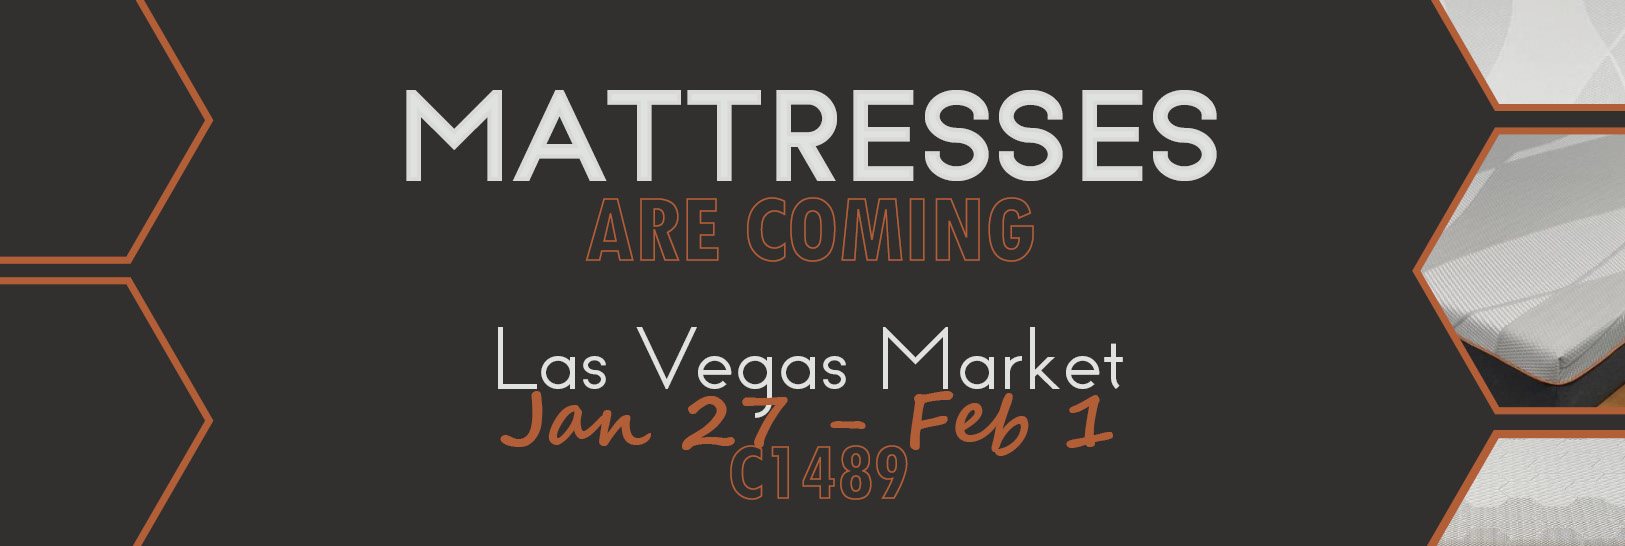 Mattresses are coming to Las Vegas Market, Jan 28 - Feb 1, 2023